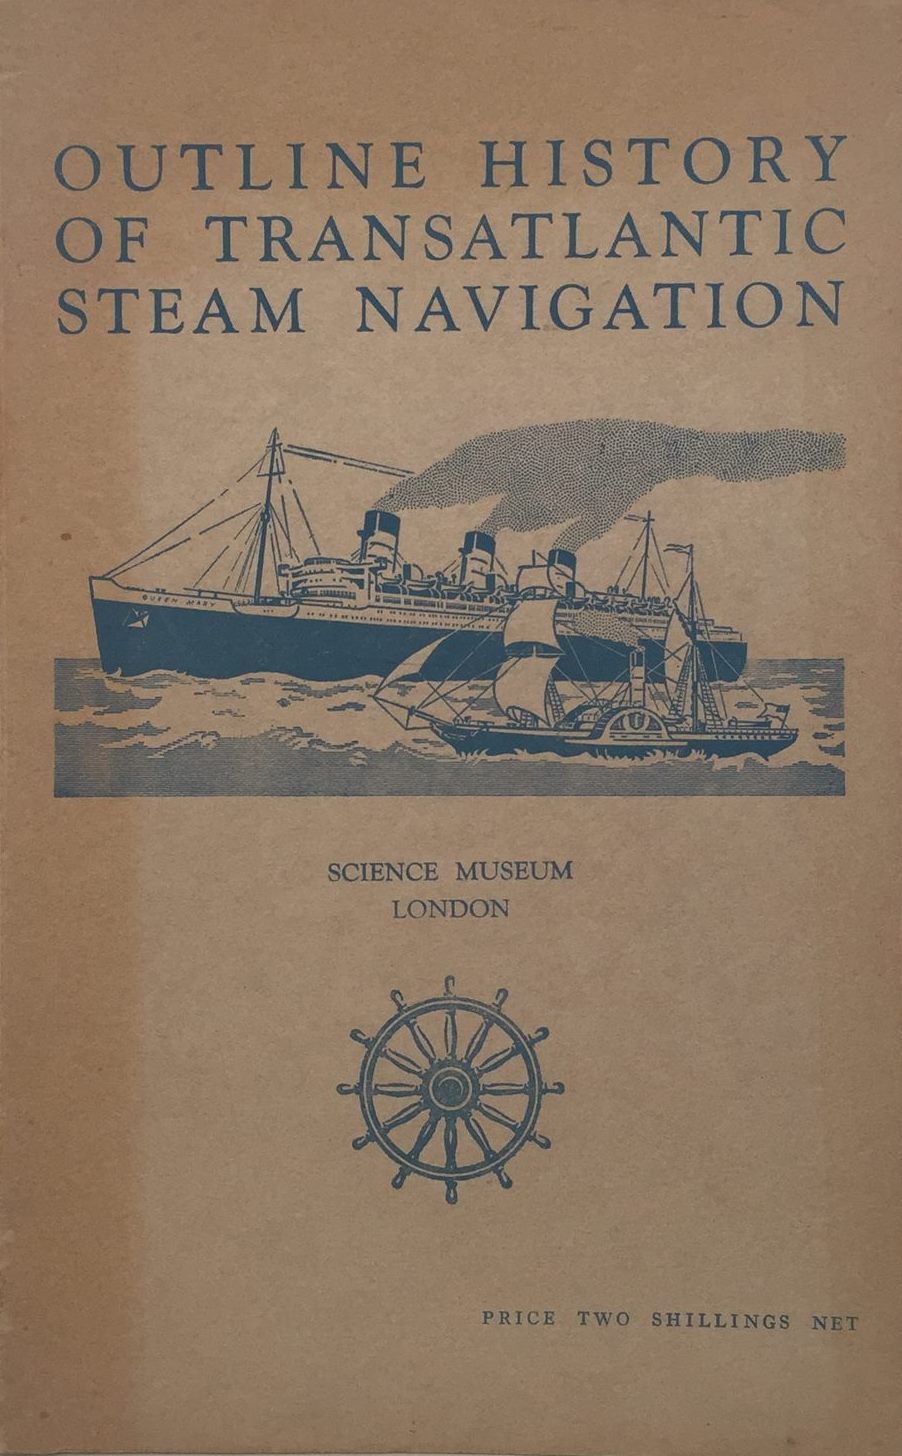 Outline History of Transatlantic Steam Navigation